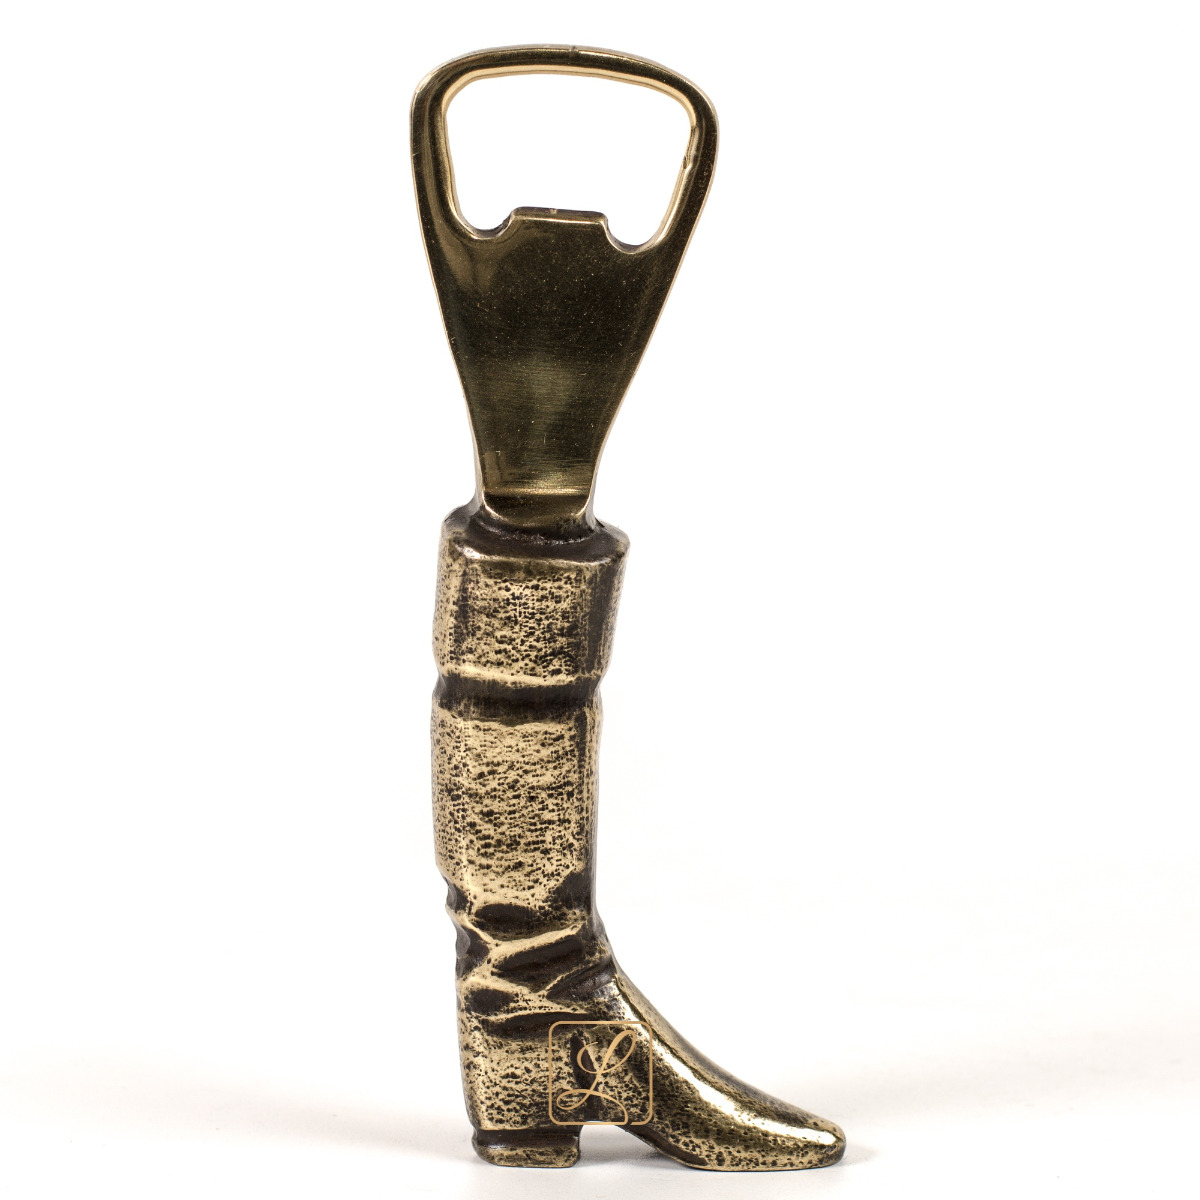 A bottle opener officer's Shoe Brass